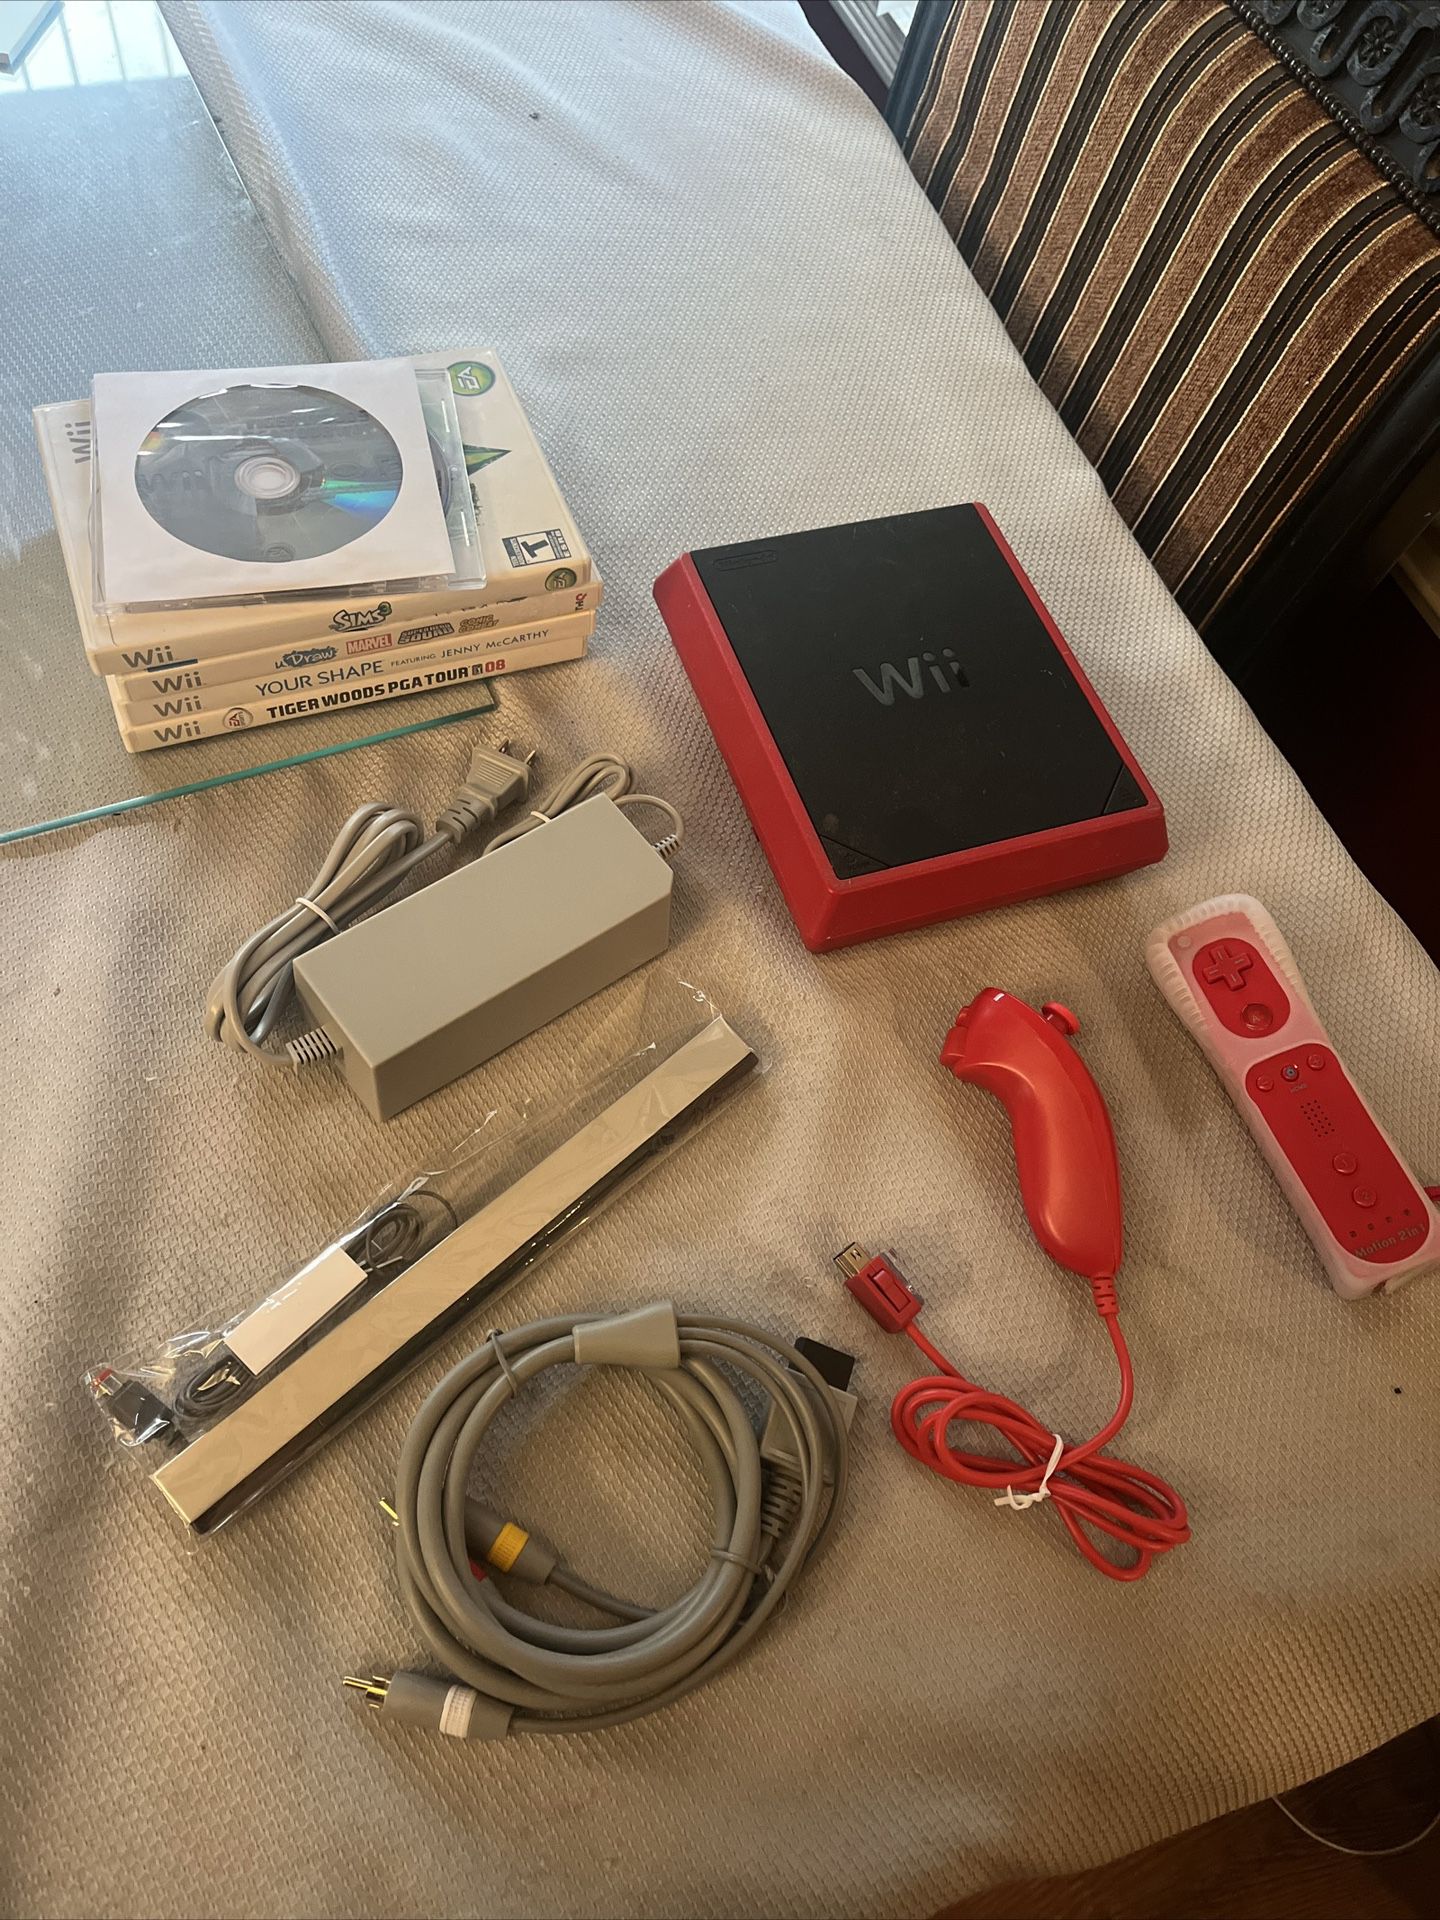 Nintendo Wii Mini RVL-201(USA) Console Bundle w/ Cords Controller 6 Games Tested